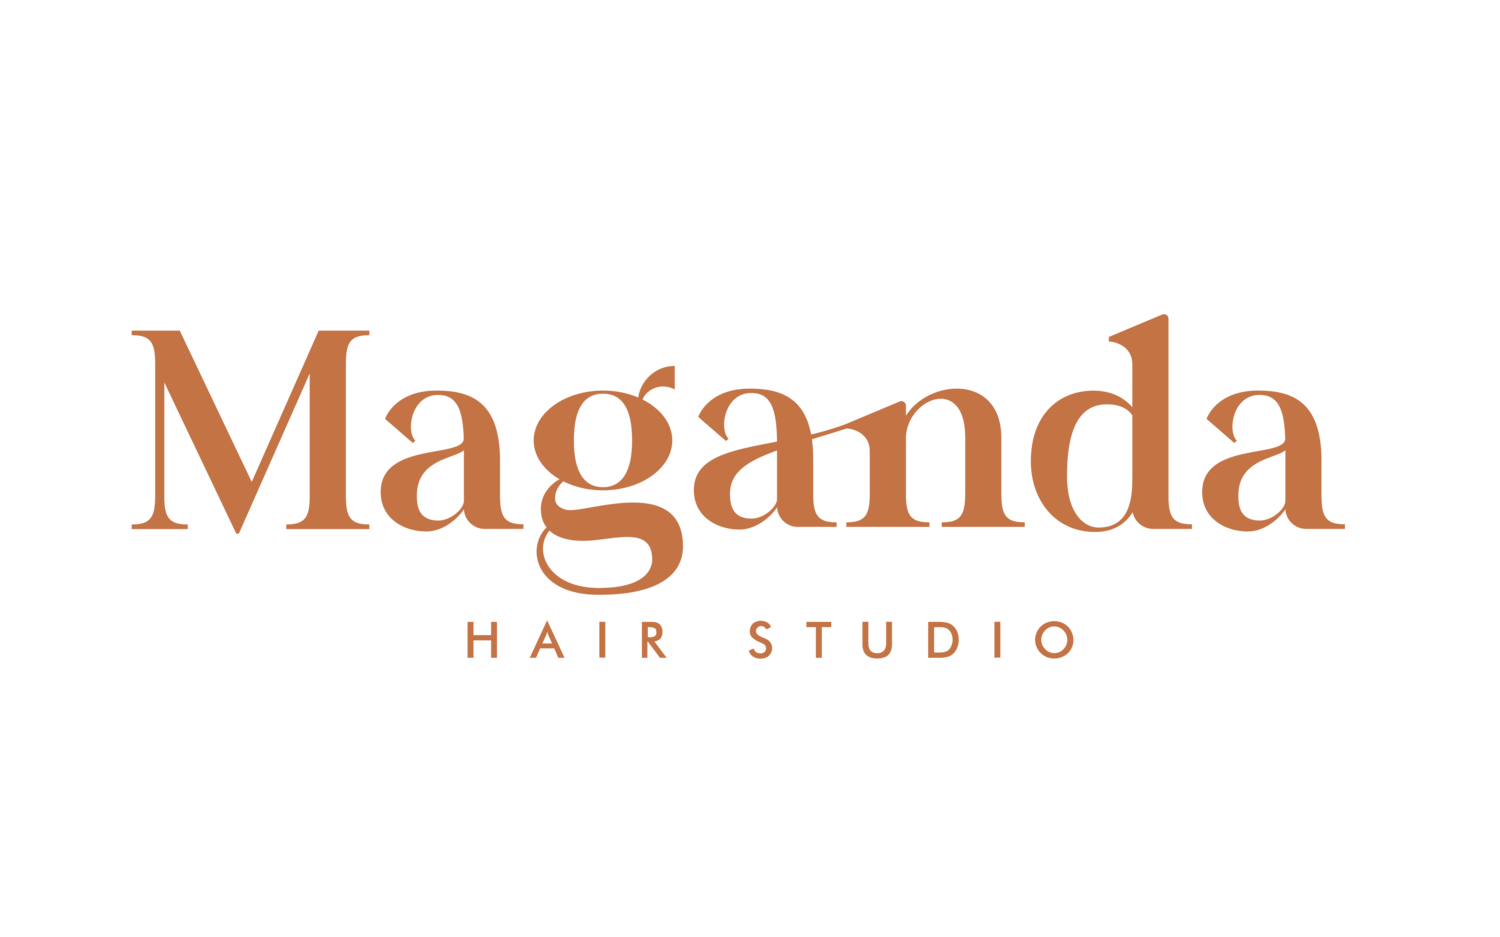 Hair Salons in Hackney Wick, Stratford, and Bow - Maganda Hair Studio